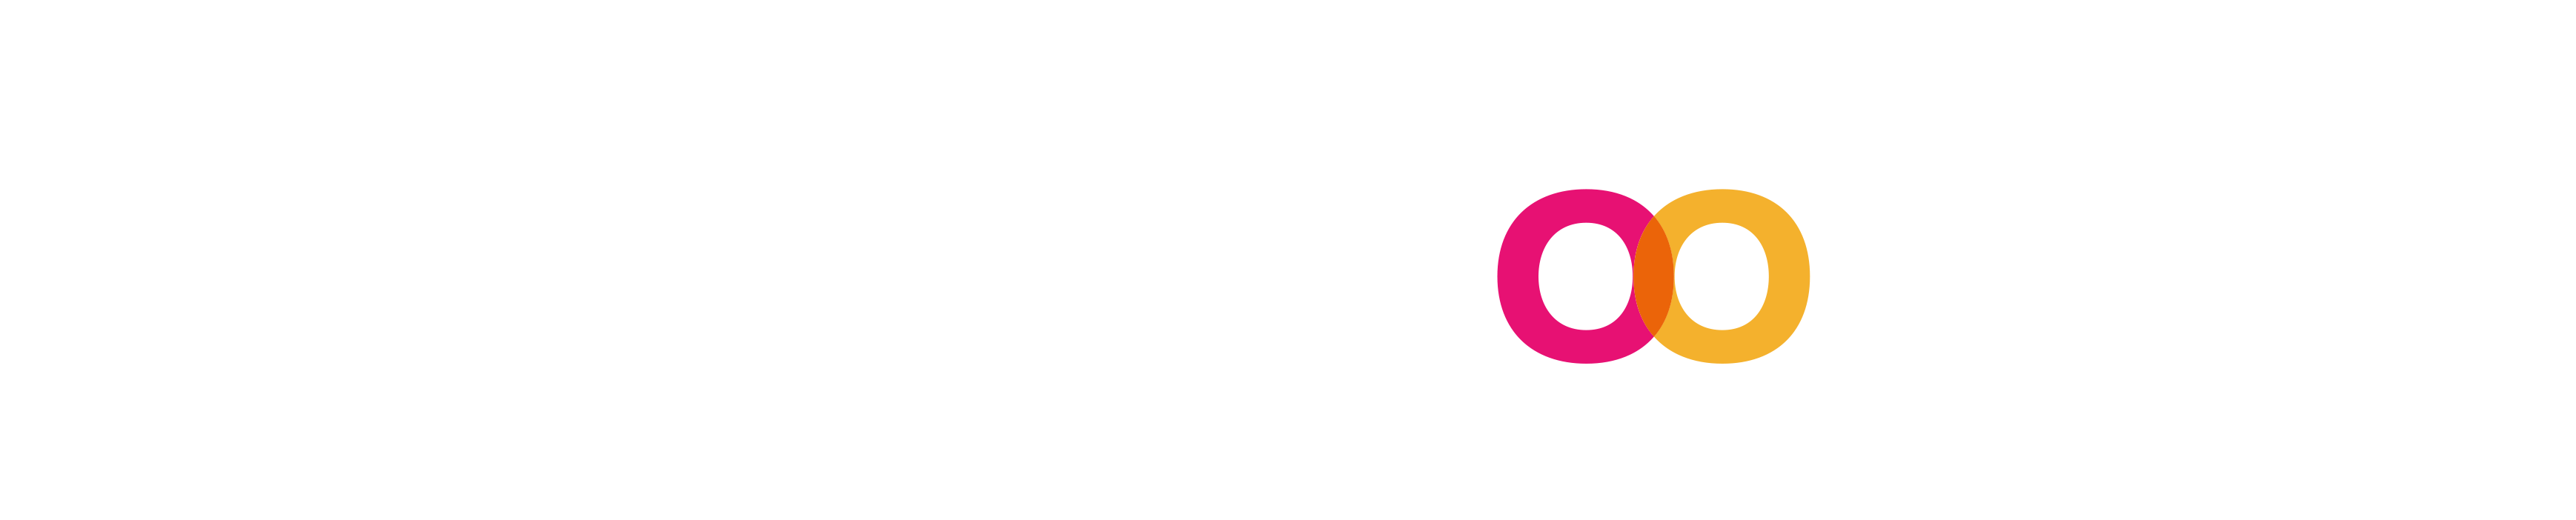 Logotipo Preferent Booking